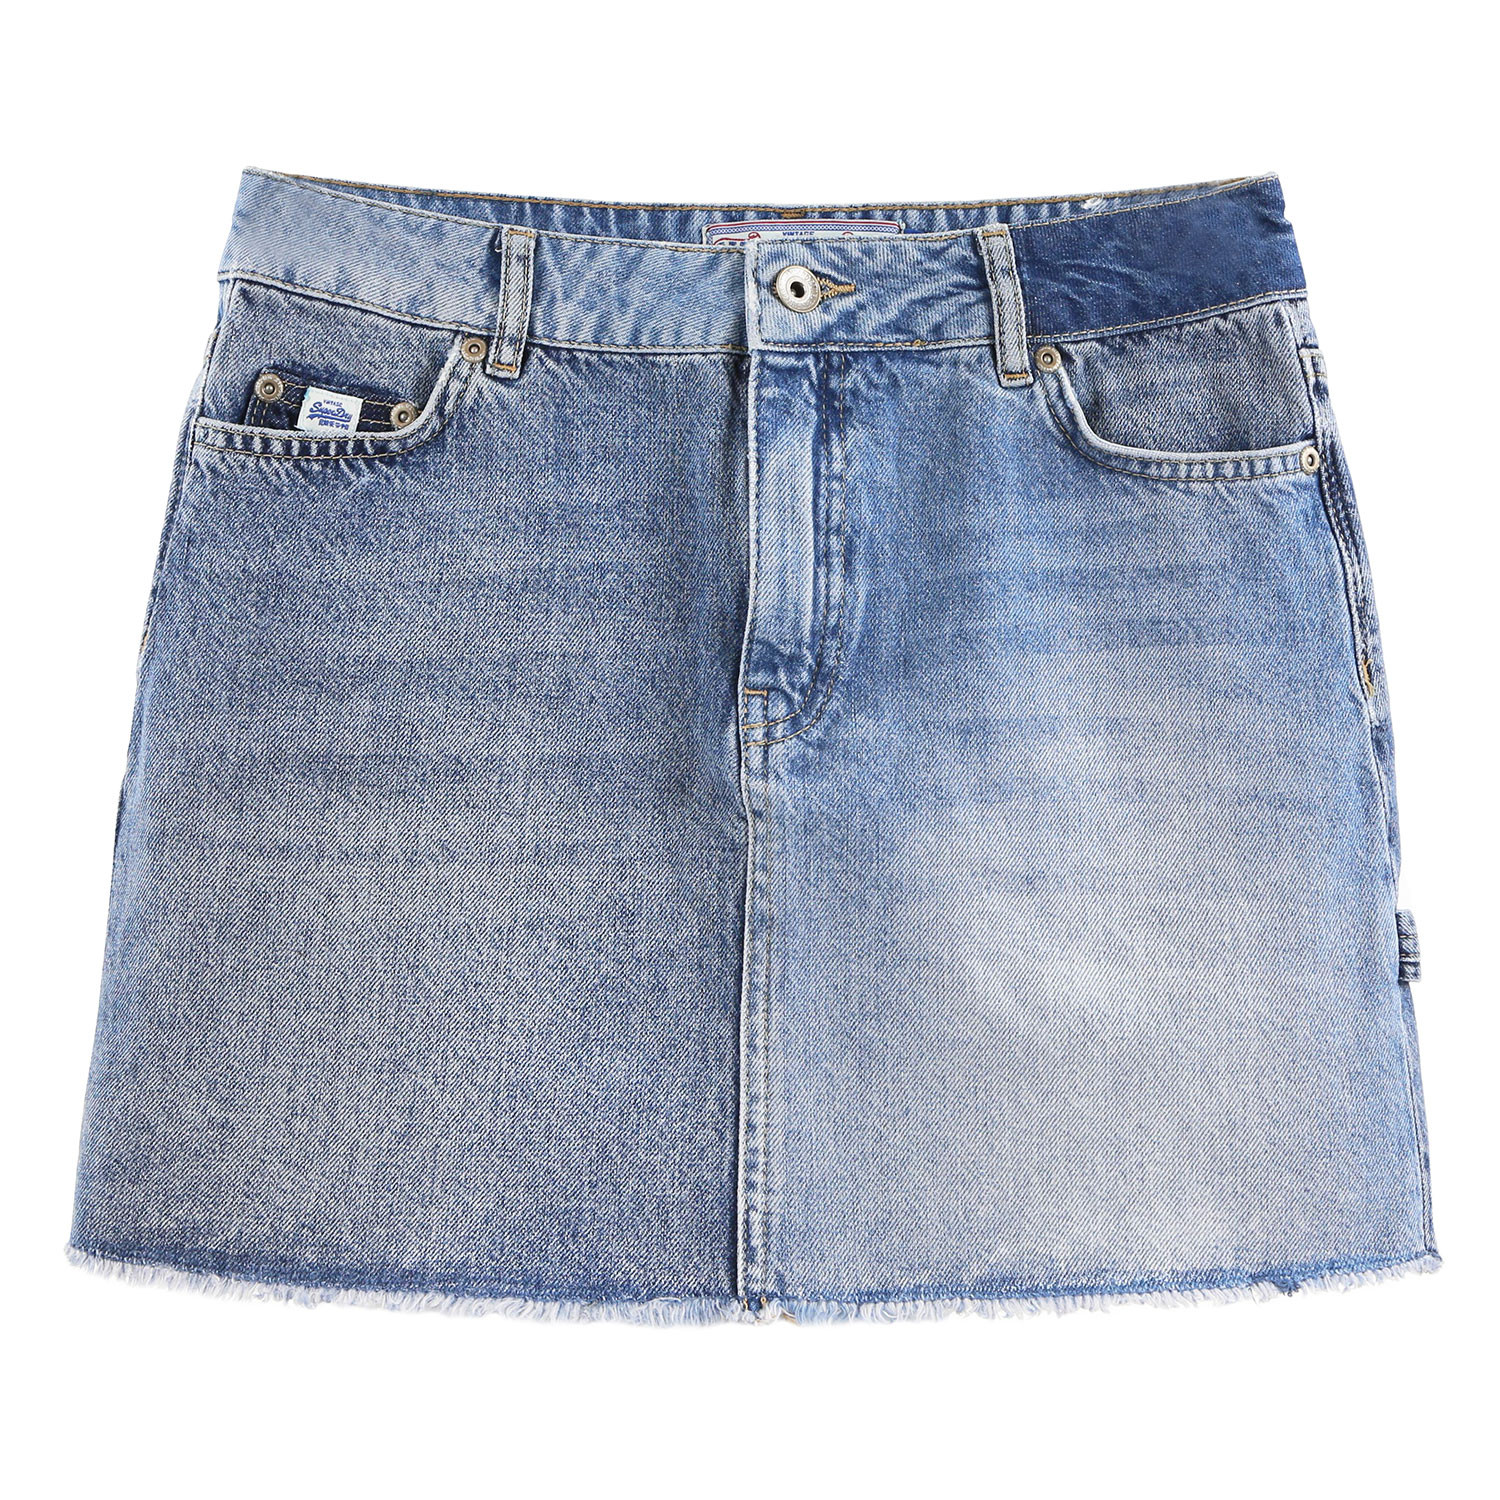 Denim Micro Mini Jupe Jeans Femme SUPERDRY BLEU pas cher - Jupe femme  SUPERDRY discount